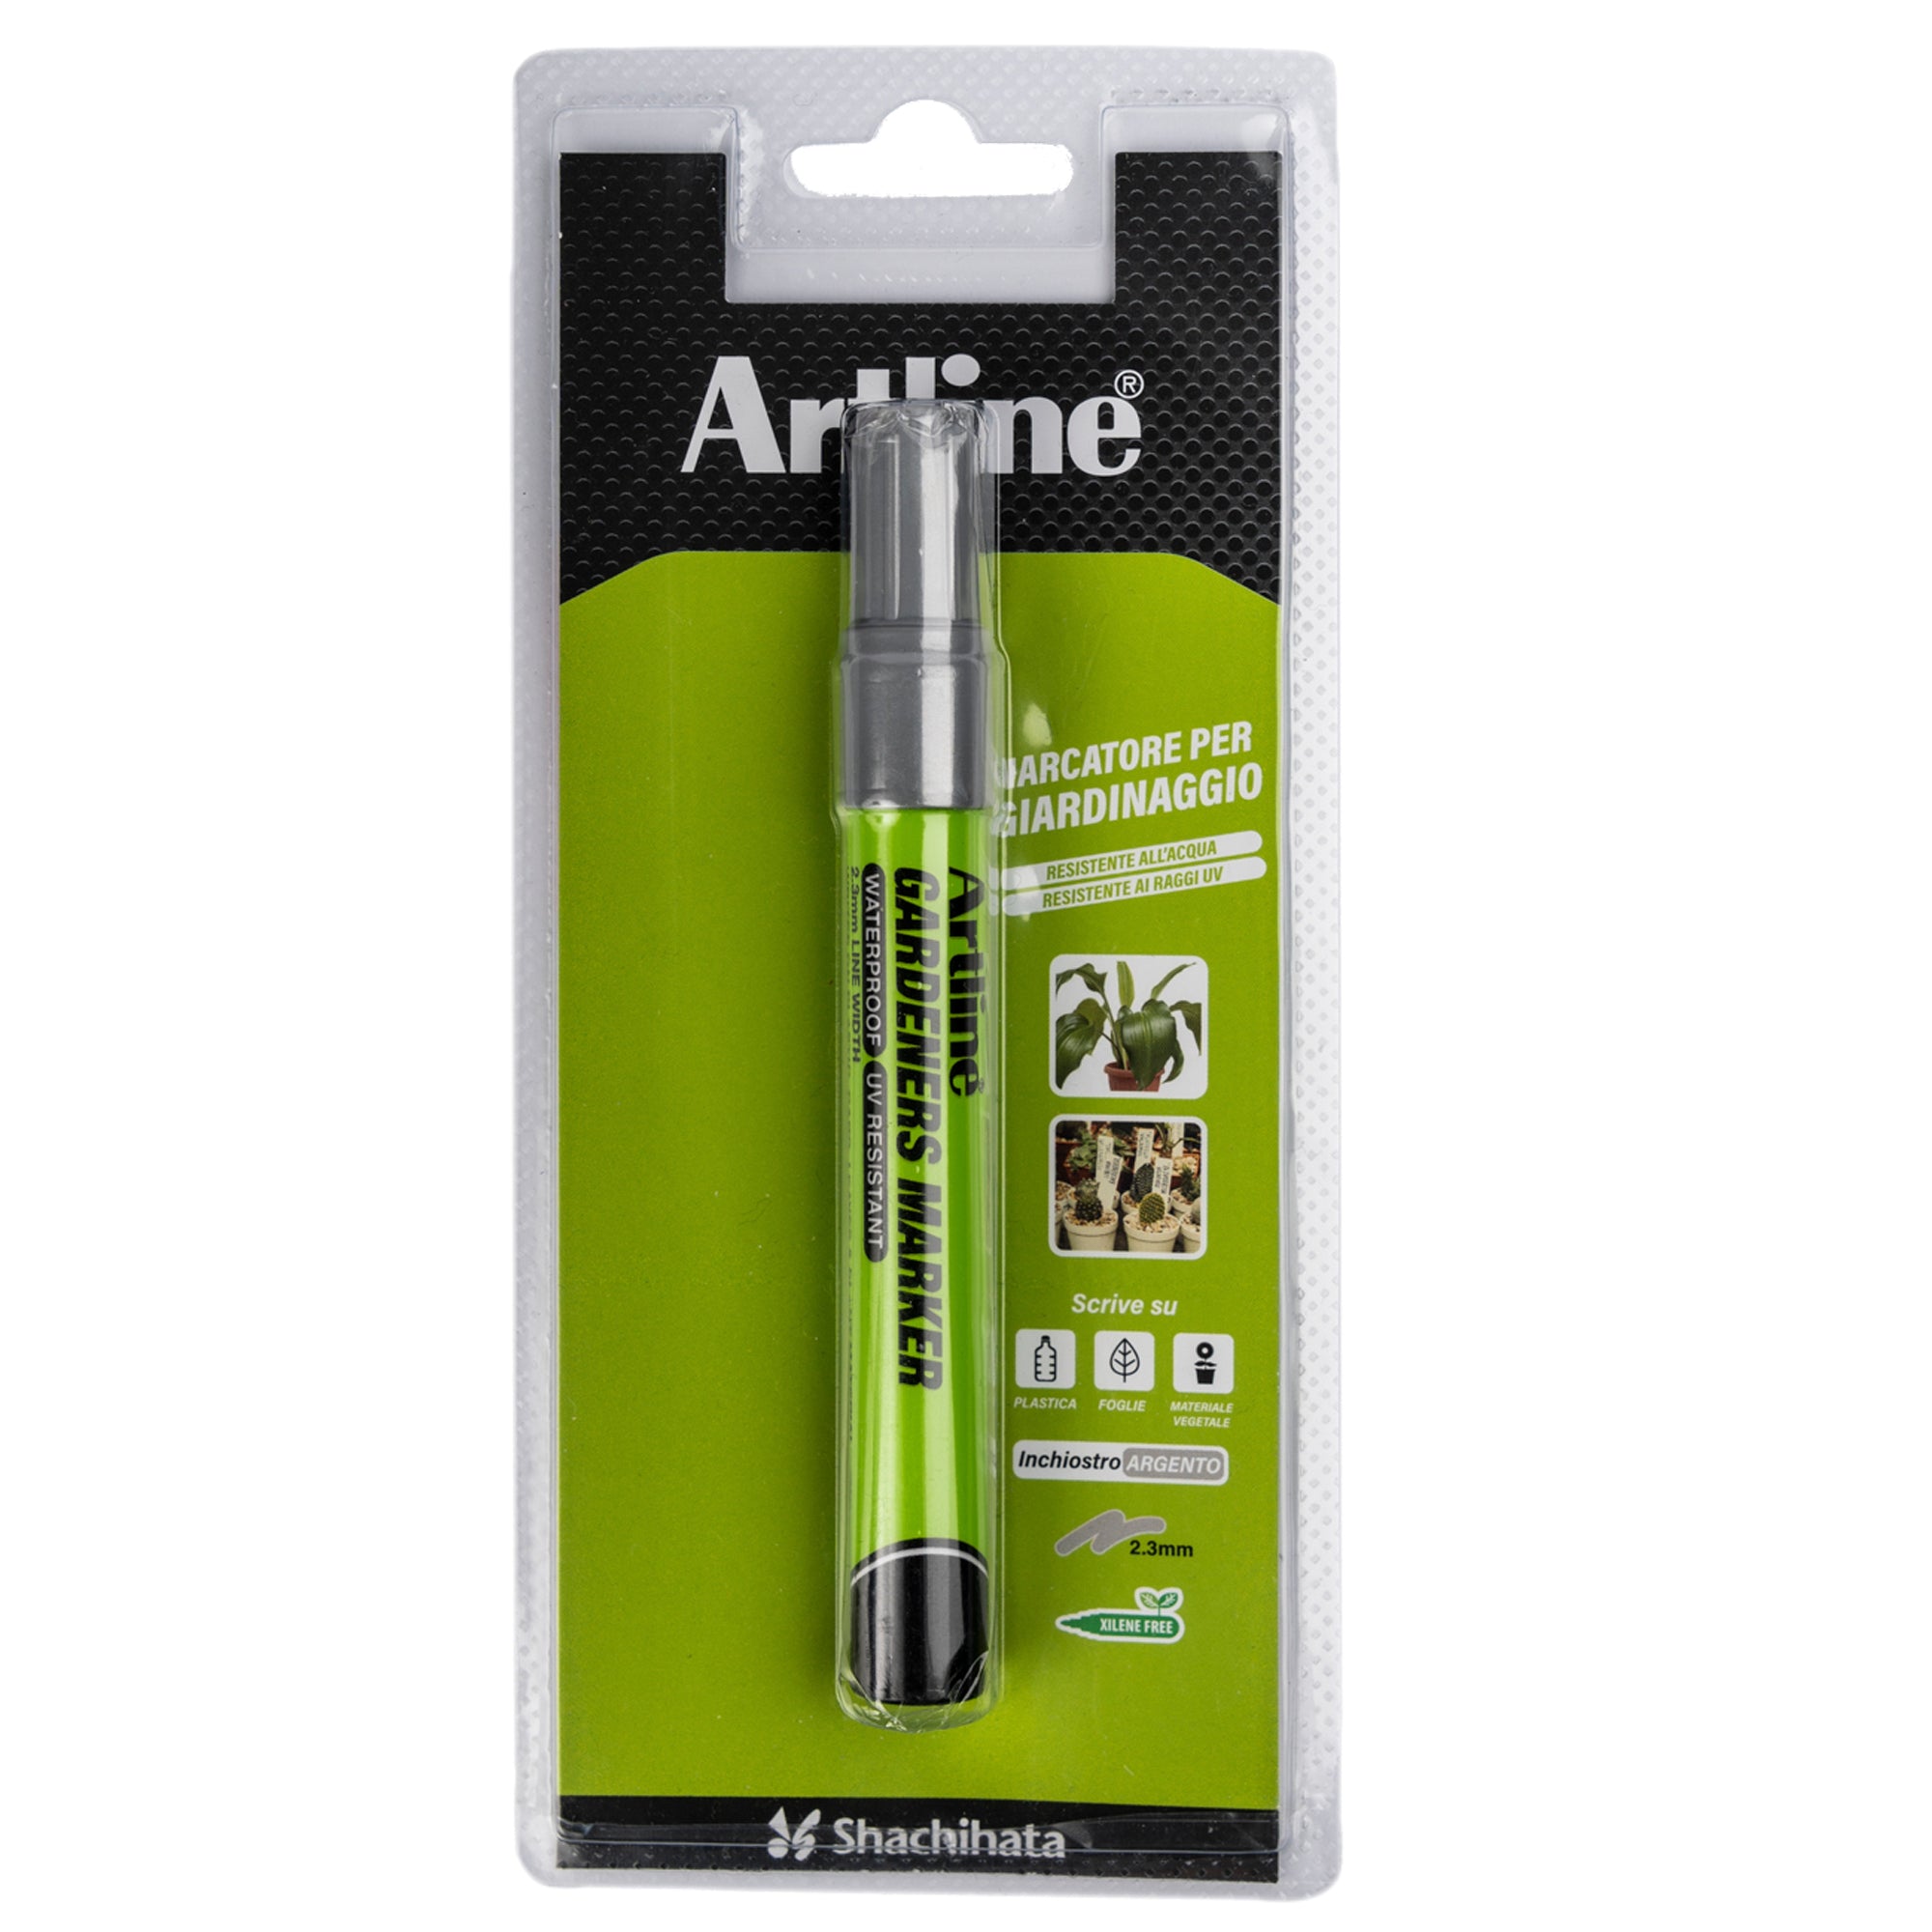 artline-marcatore-permanente-speciale-giardinaggio-punta-2-3mm-tonda-argento